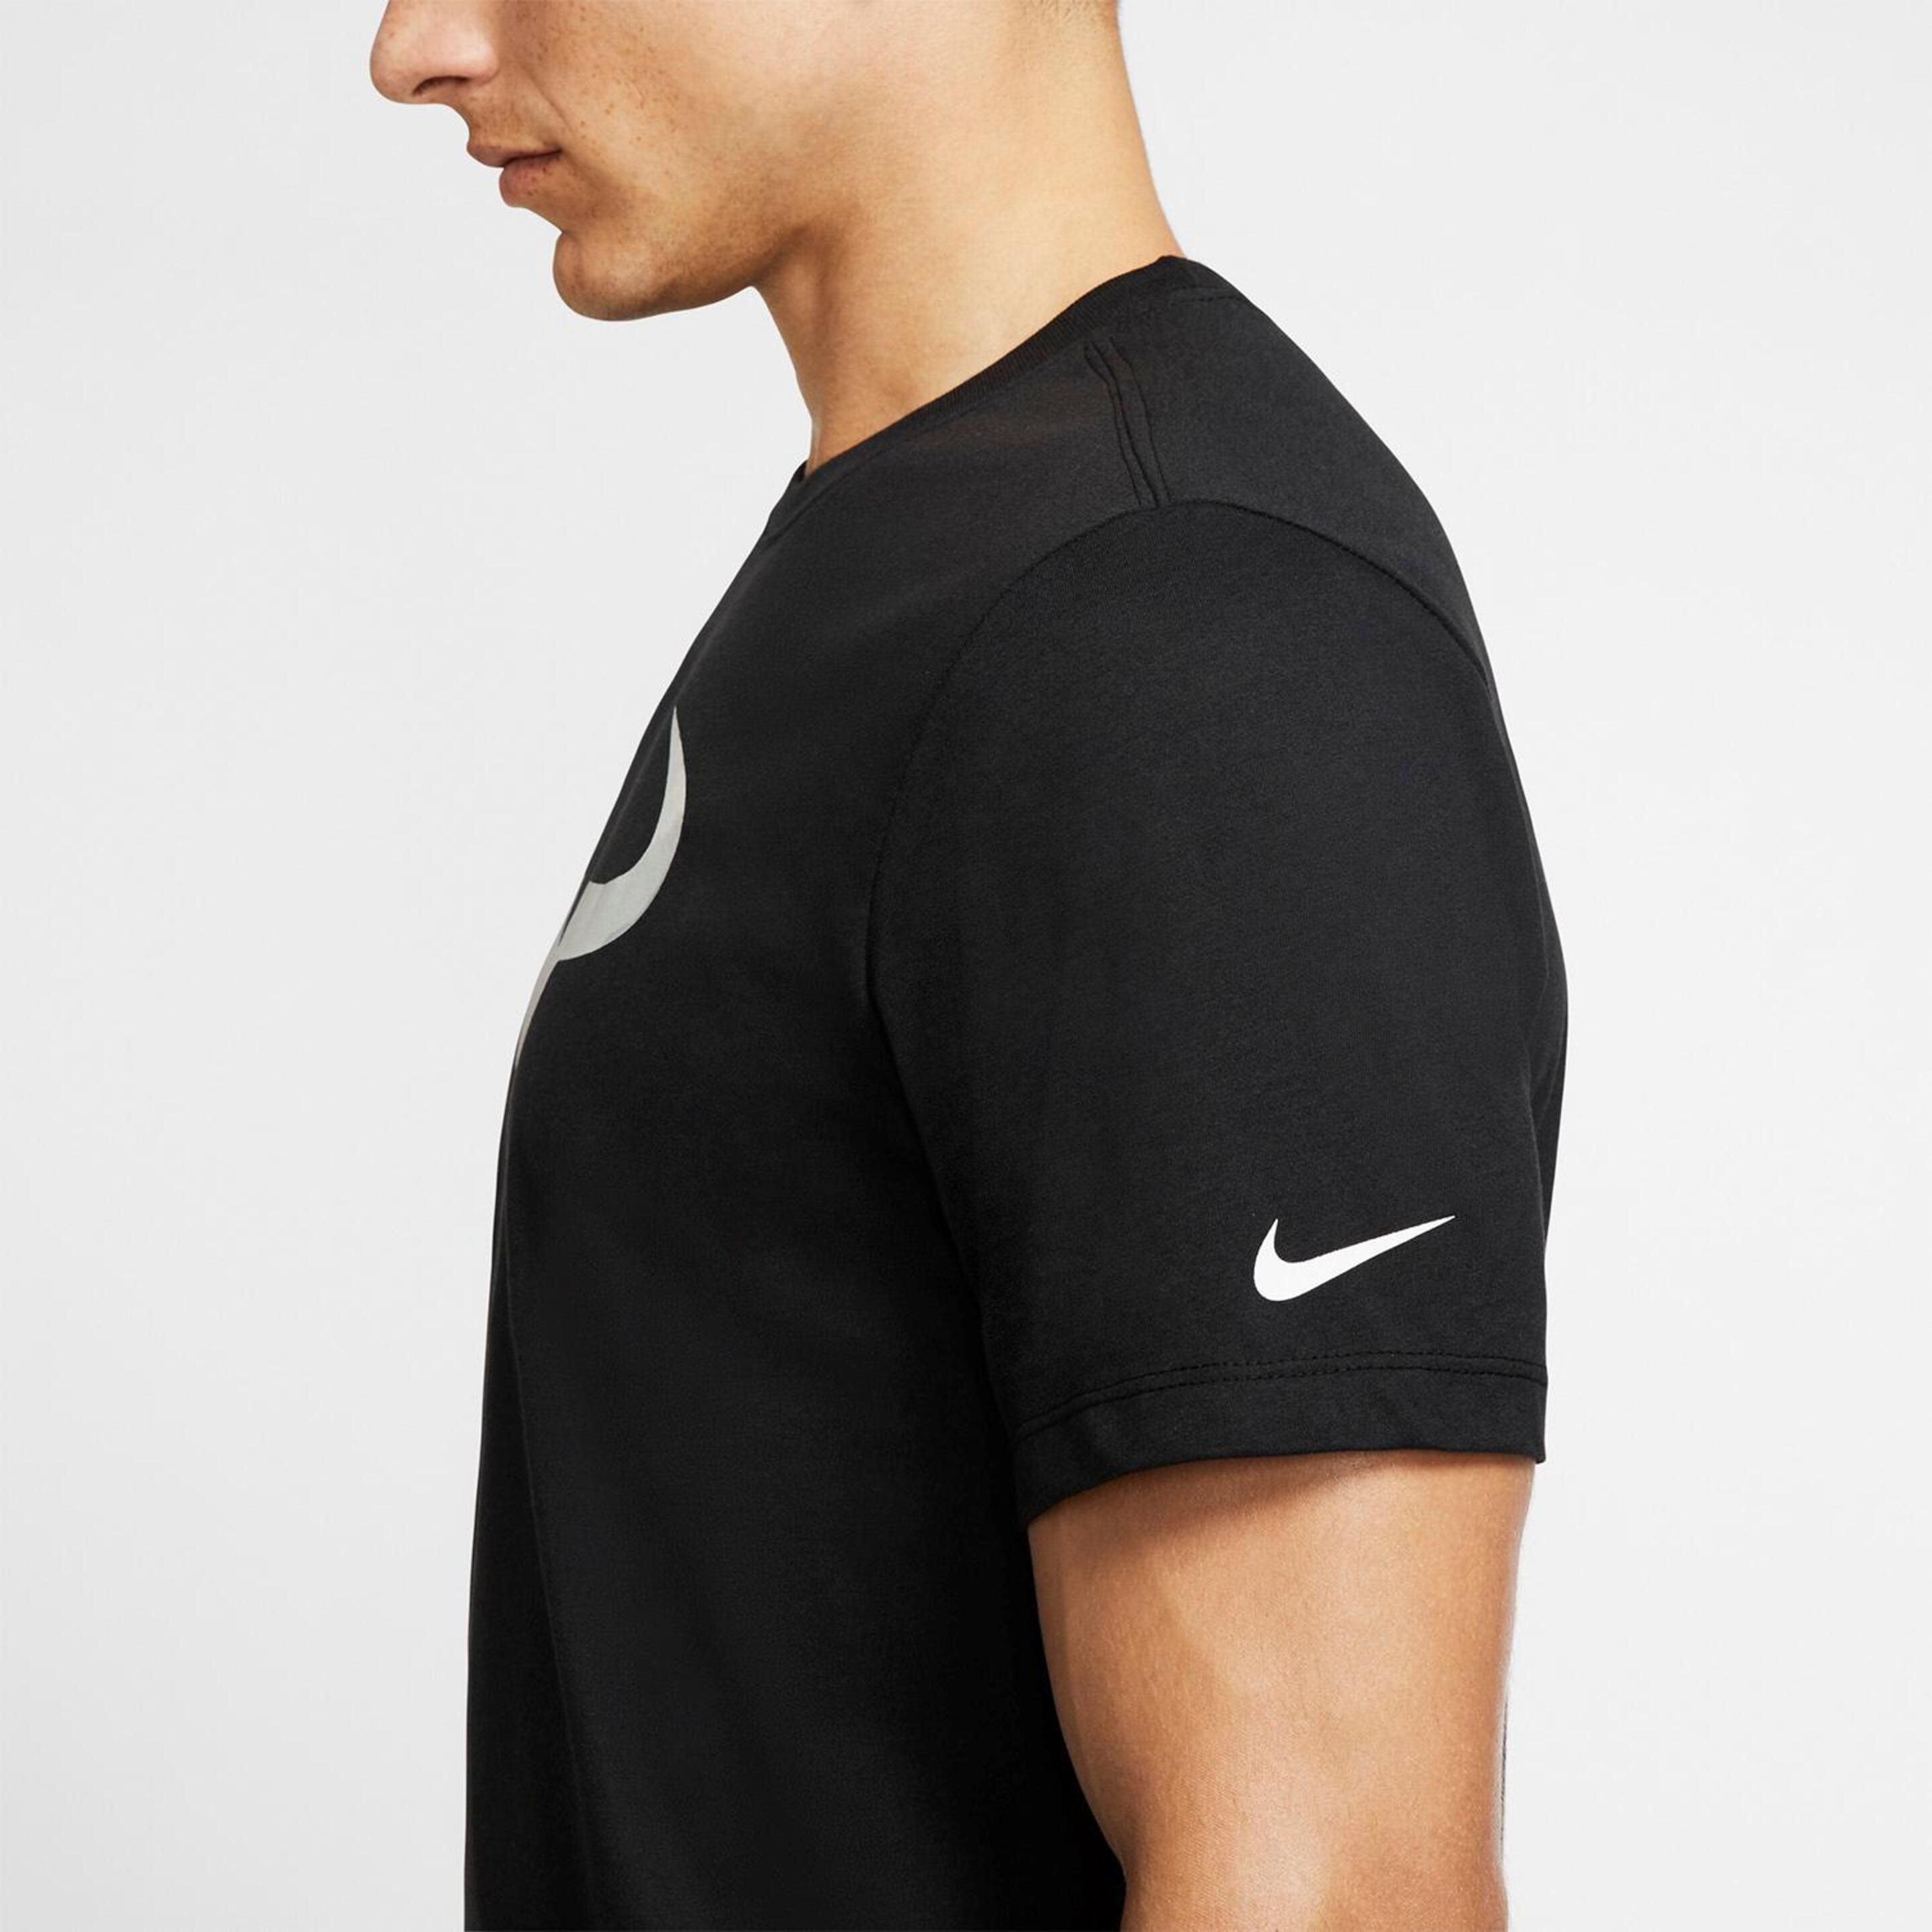 T-shirt Nike Nadal